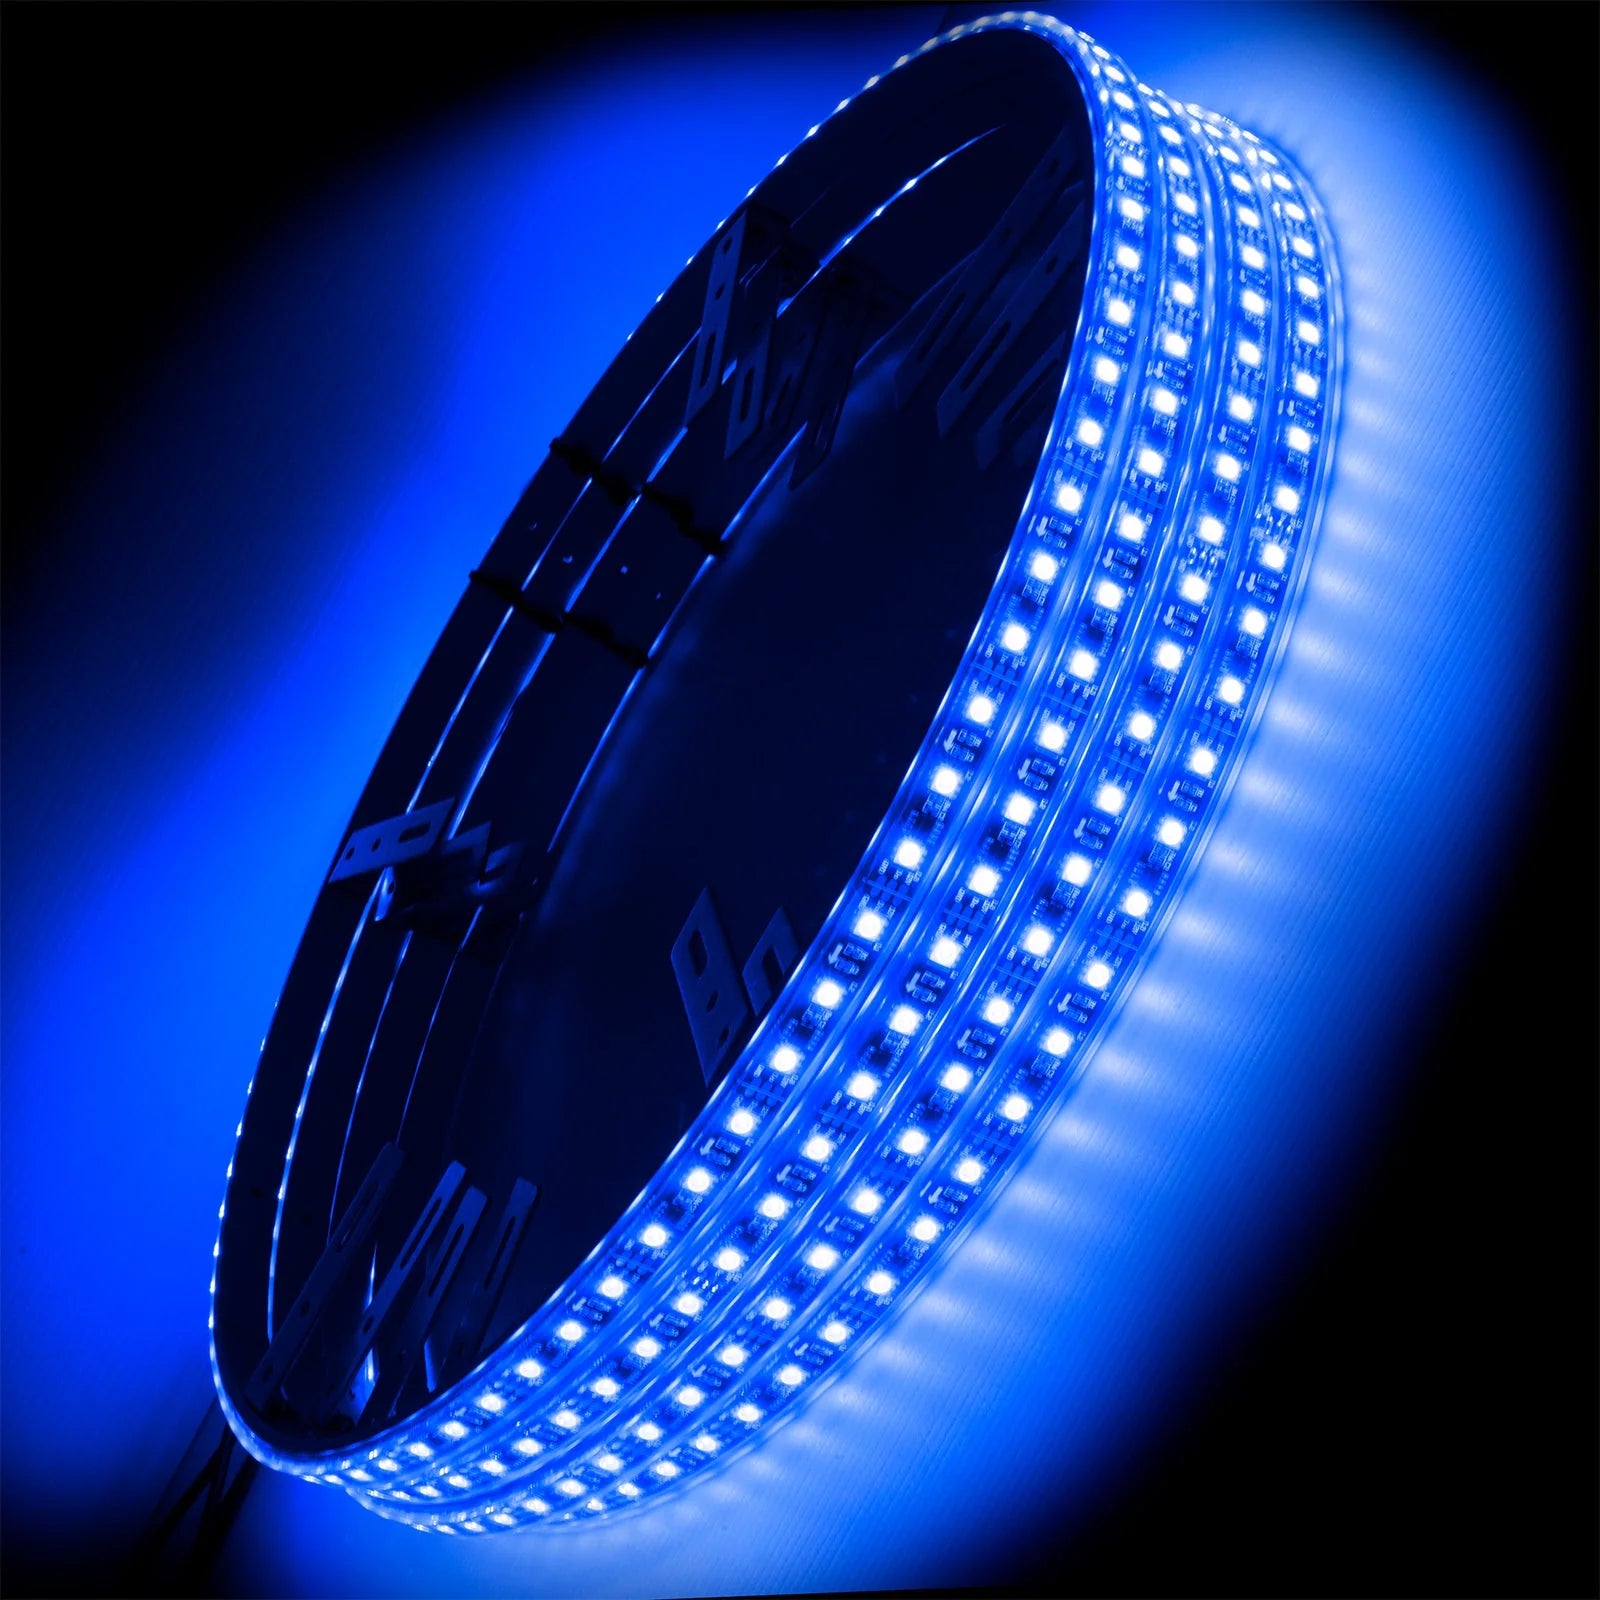 Oracle Double LED Illuminated Wheel Rings, Double Row - Blue